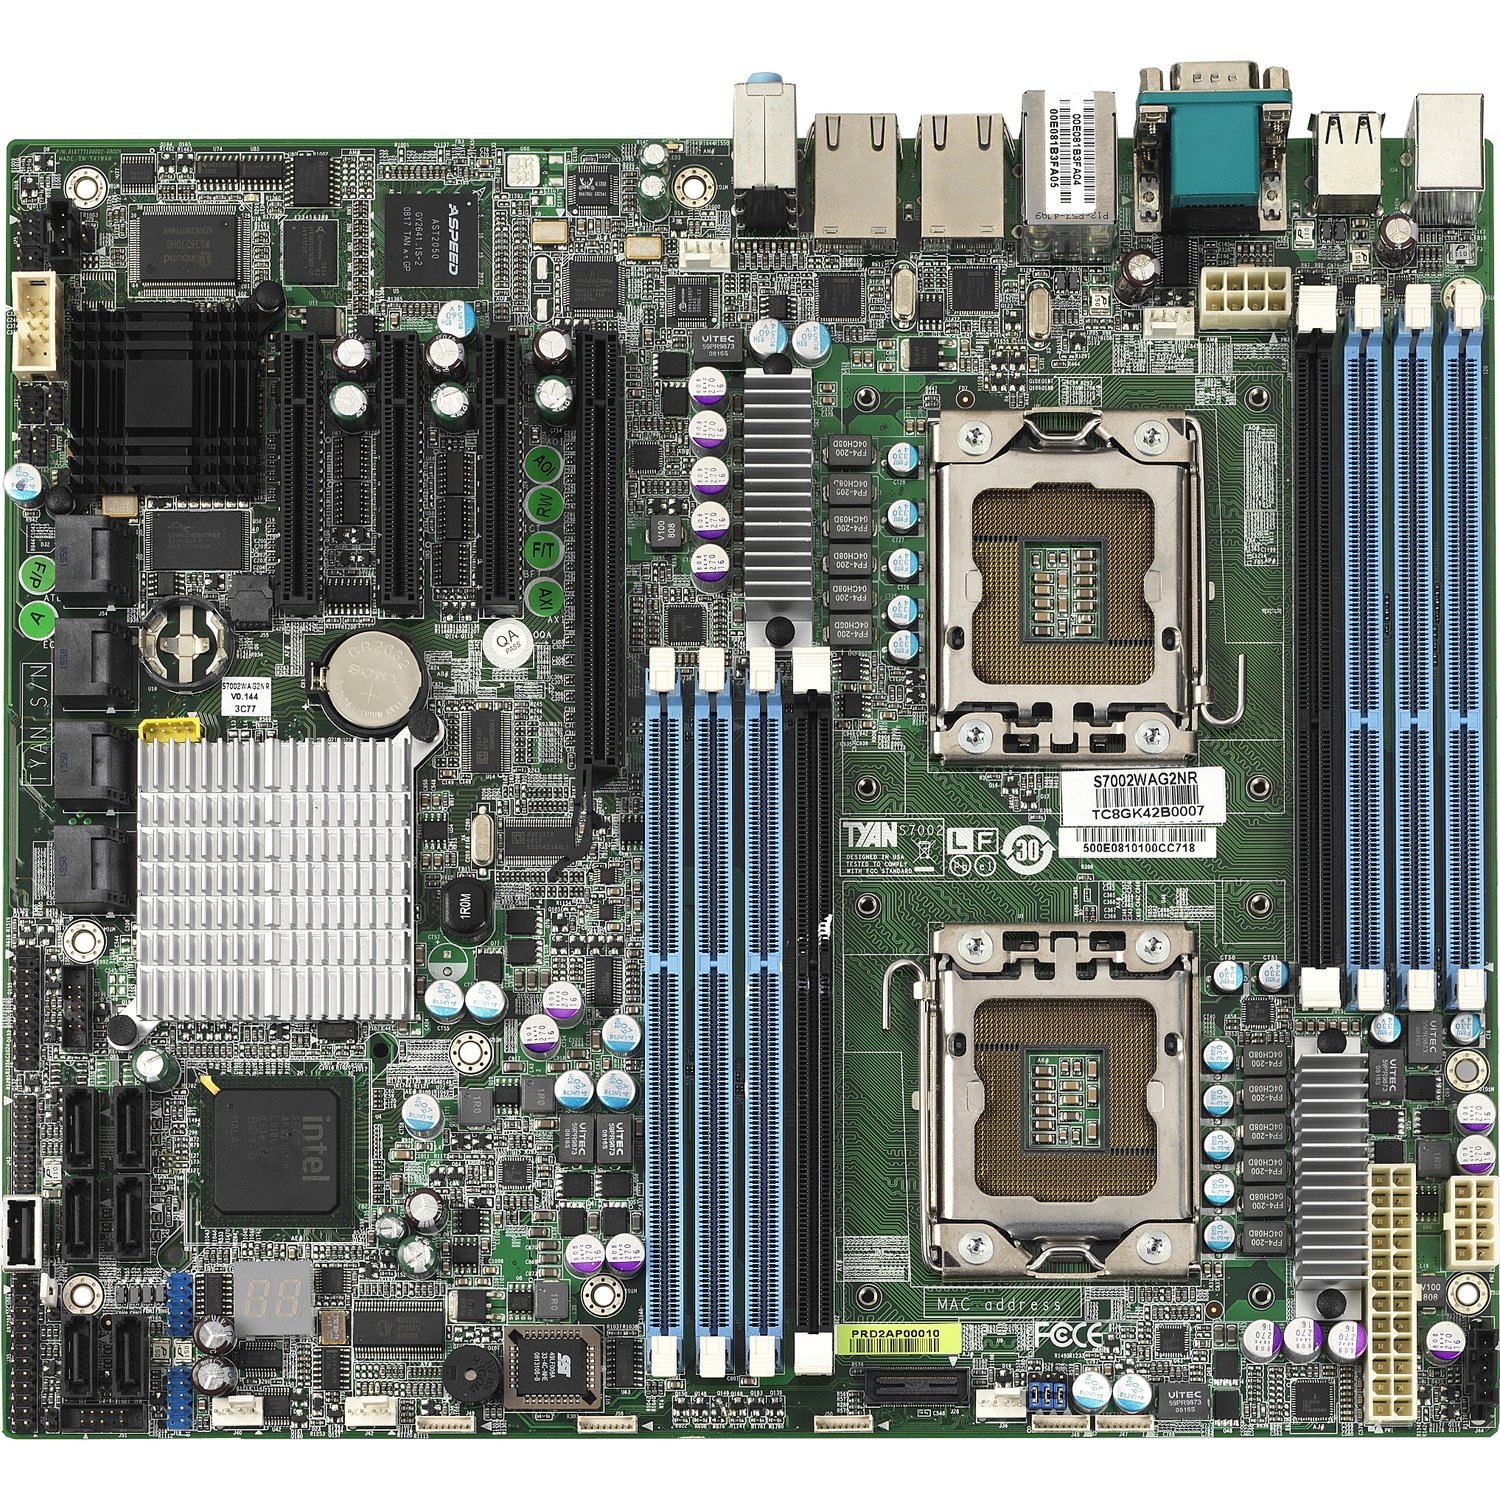 Tyan S7002 Server Motherboard - Intel 5520 Chipset - Socket B LGA-1366 - SSI CEB